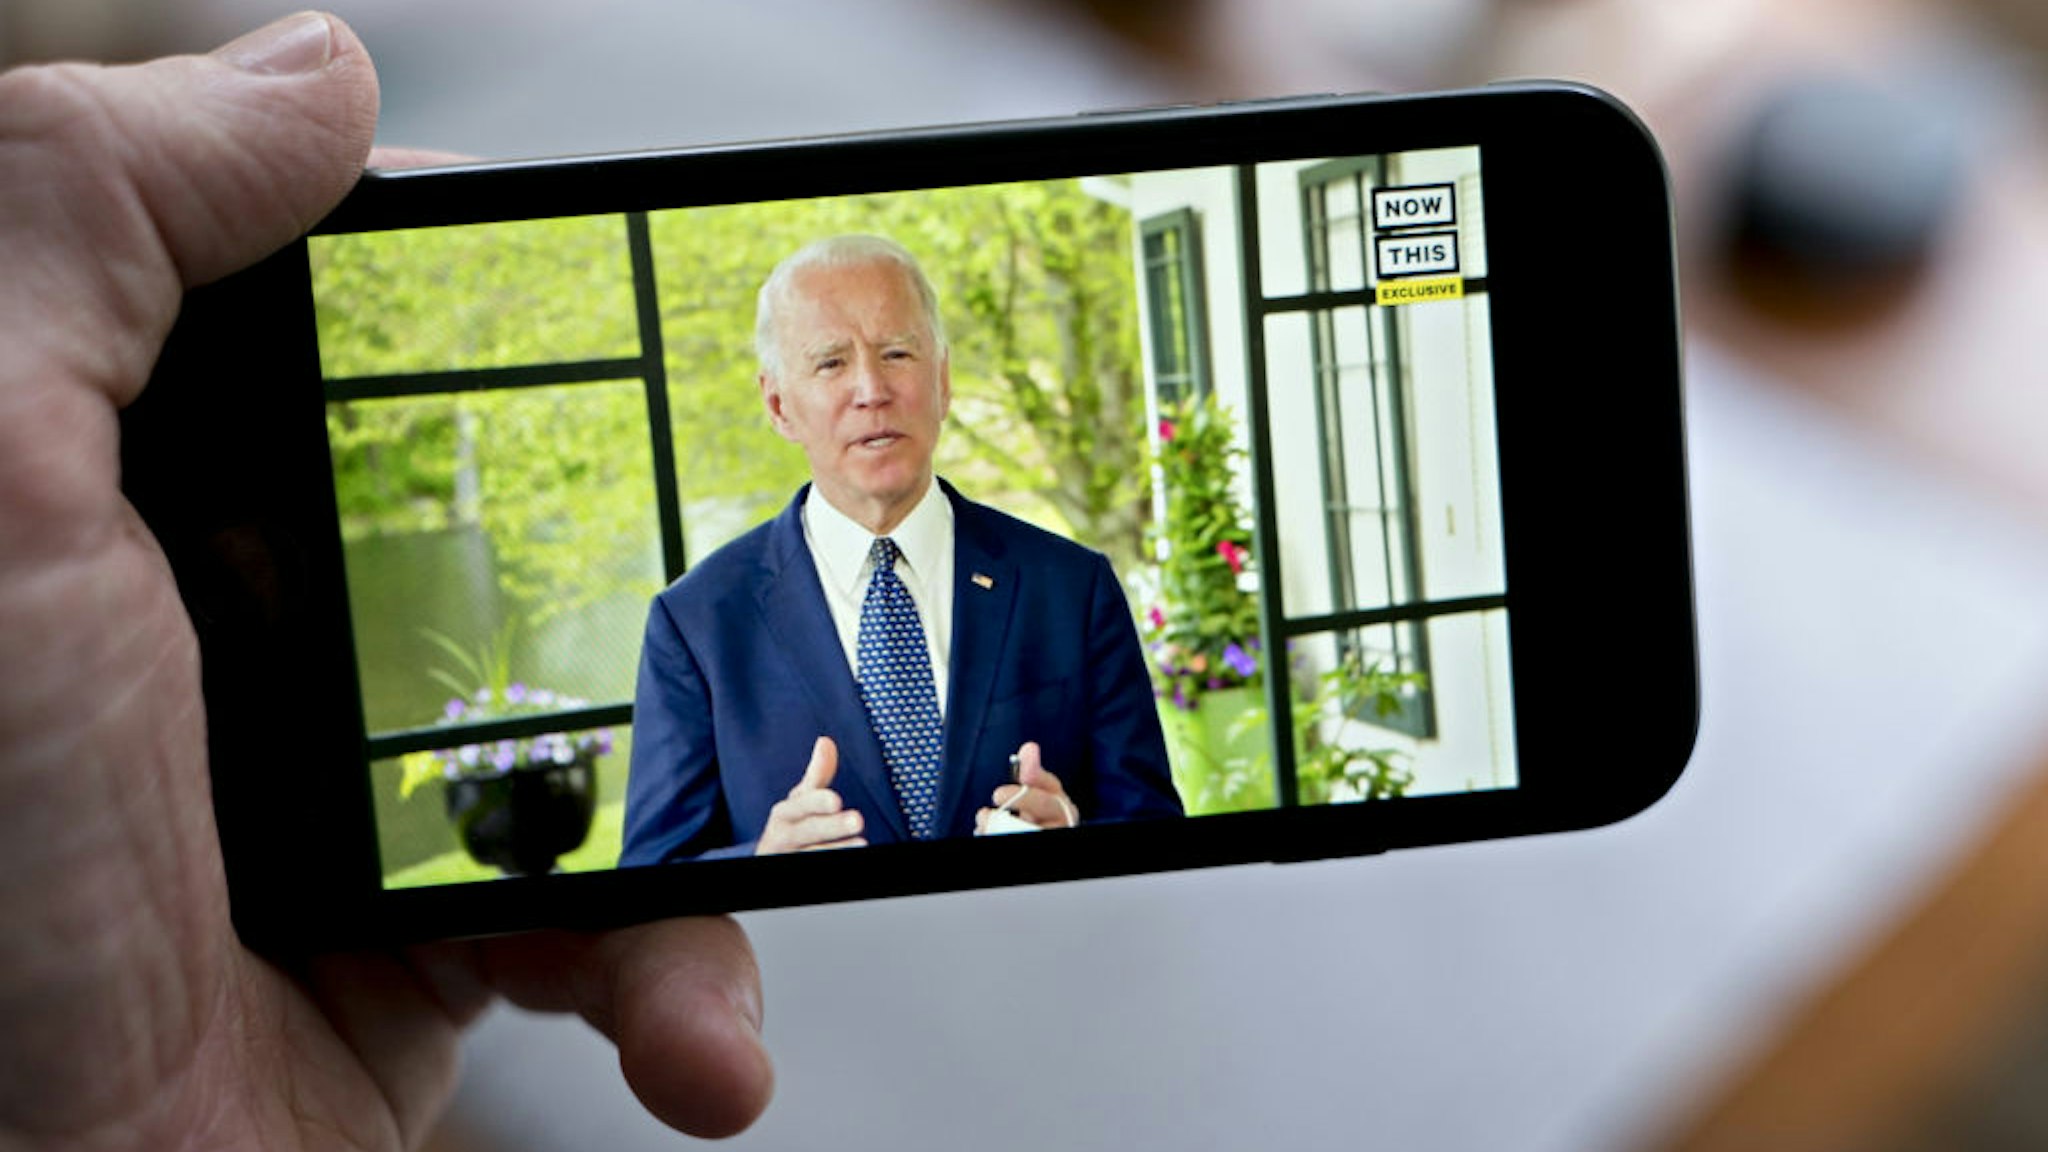 Former Vice President Joe Biden, presumptive Democratic presidential nominee, speaks during a NowThis economic address seen on a smartphone in Arlington, Virginia, U.S., on Friday, May 8, 2020.